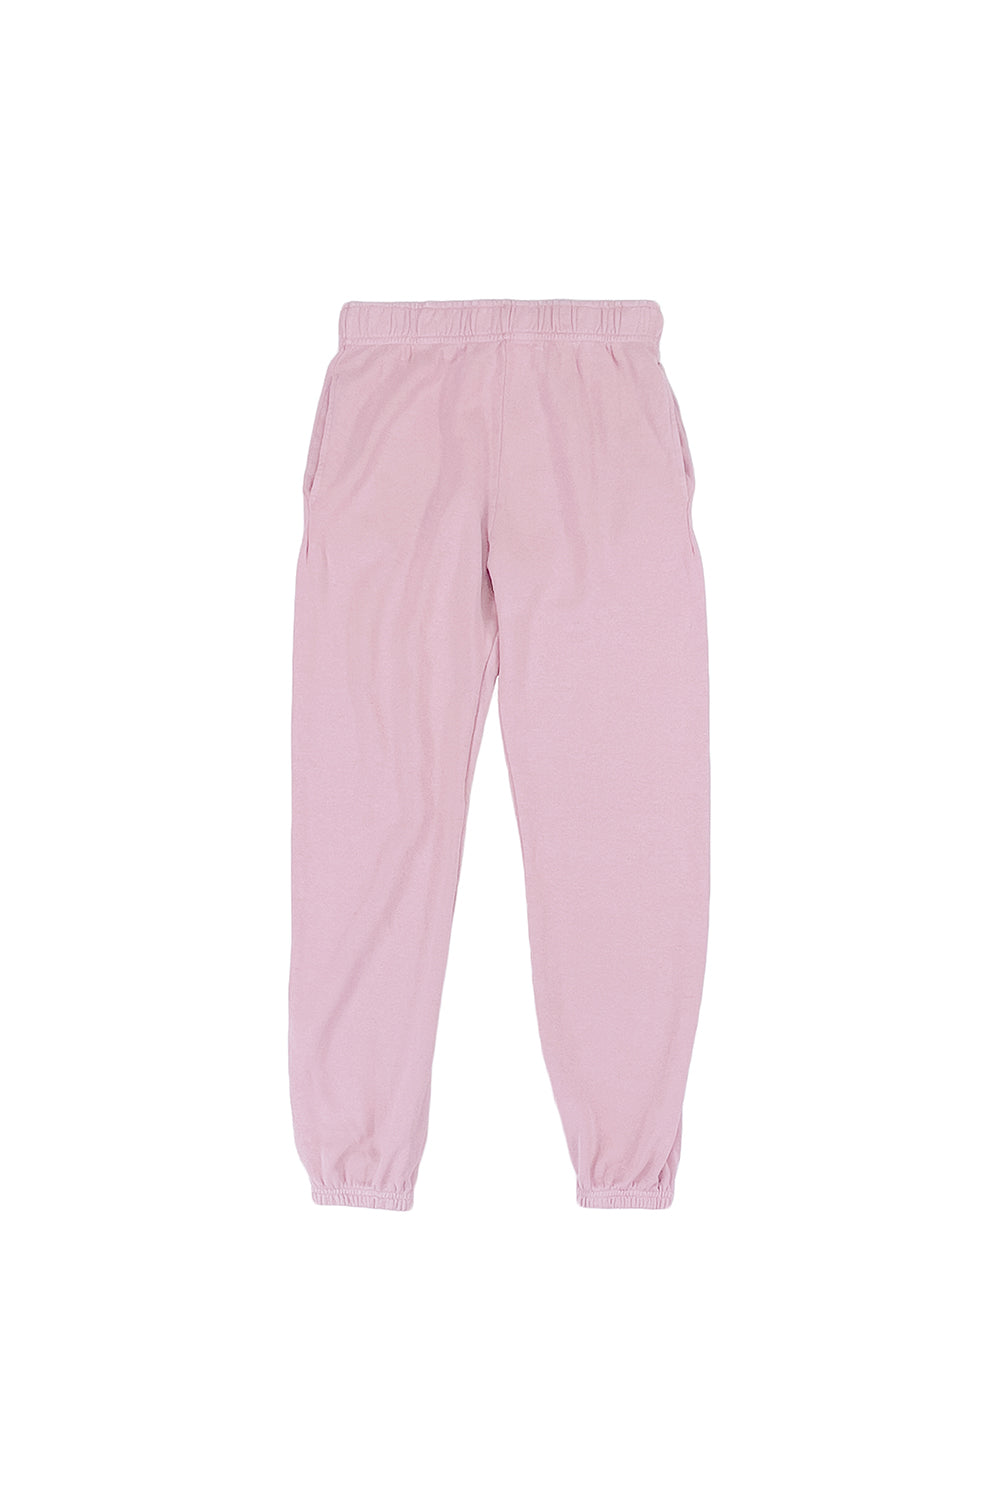 Classic Sweatpant | Jungmaven Hemp Clothing & Accessories / Color: Rose Quartz